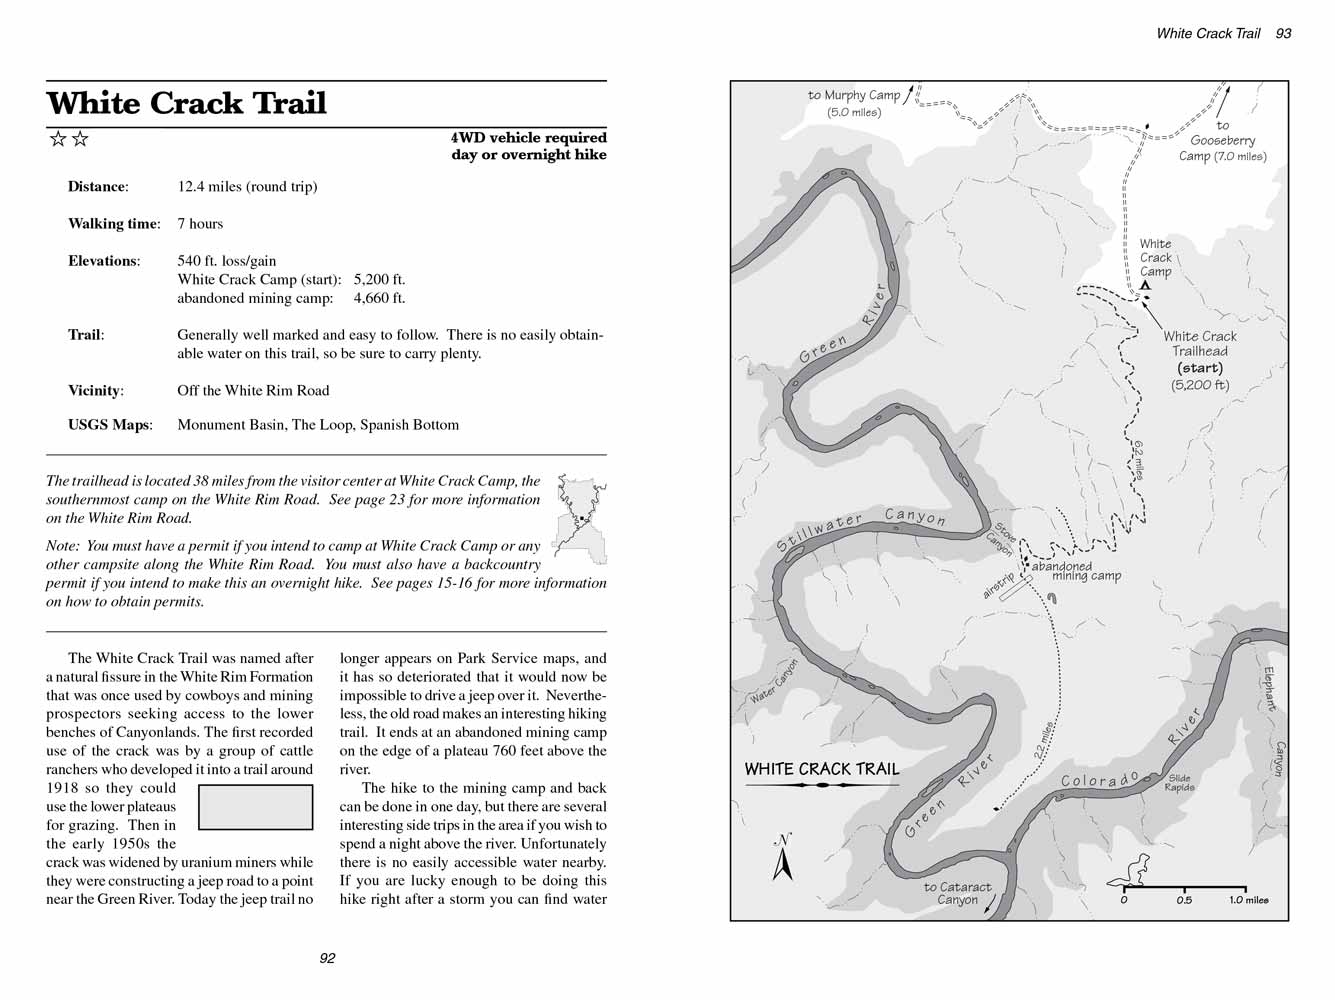 White Crack Trail, Canyonlands National Park